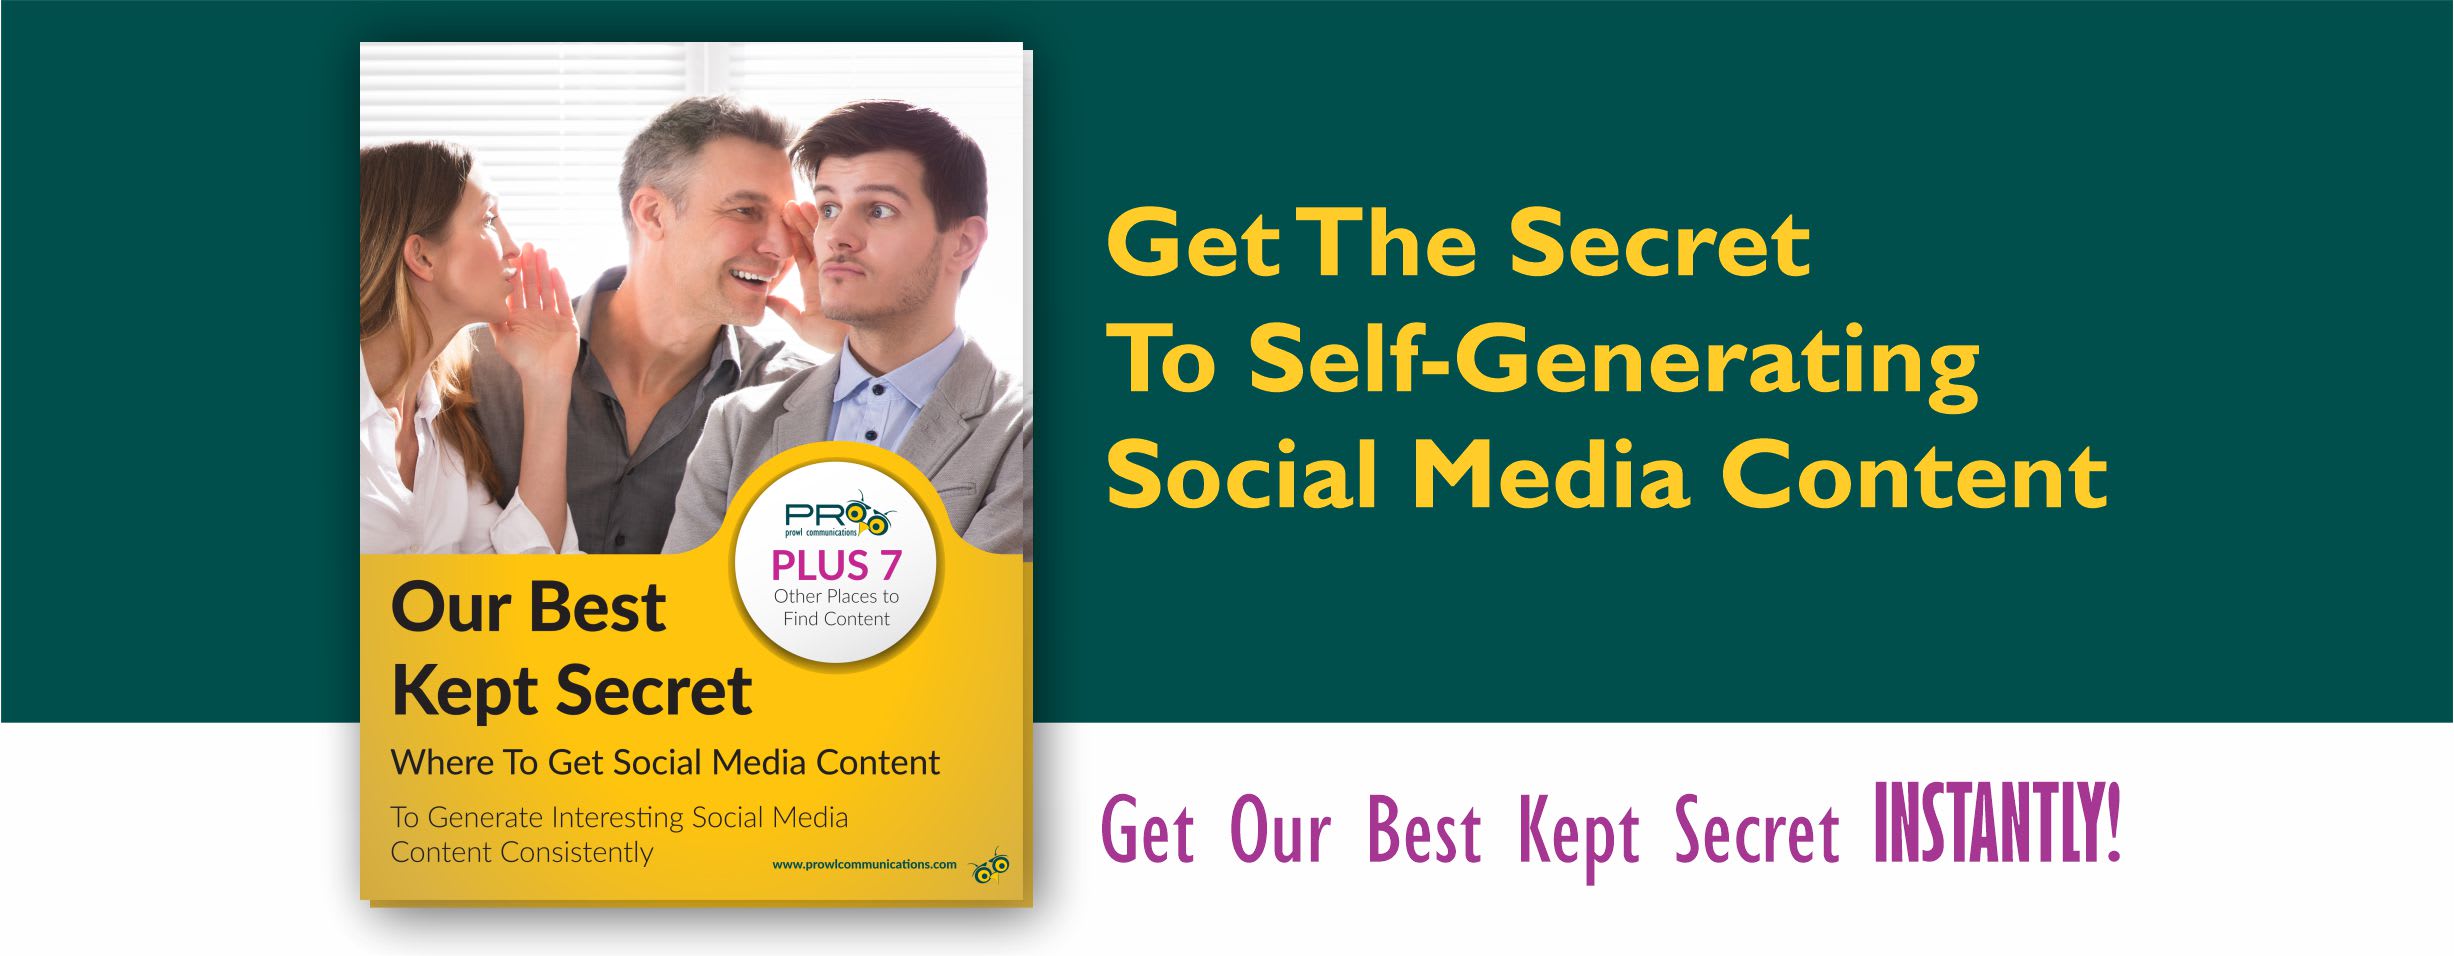 best kept secret for social media content